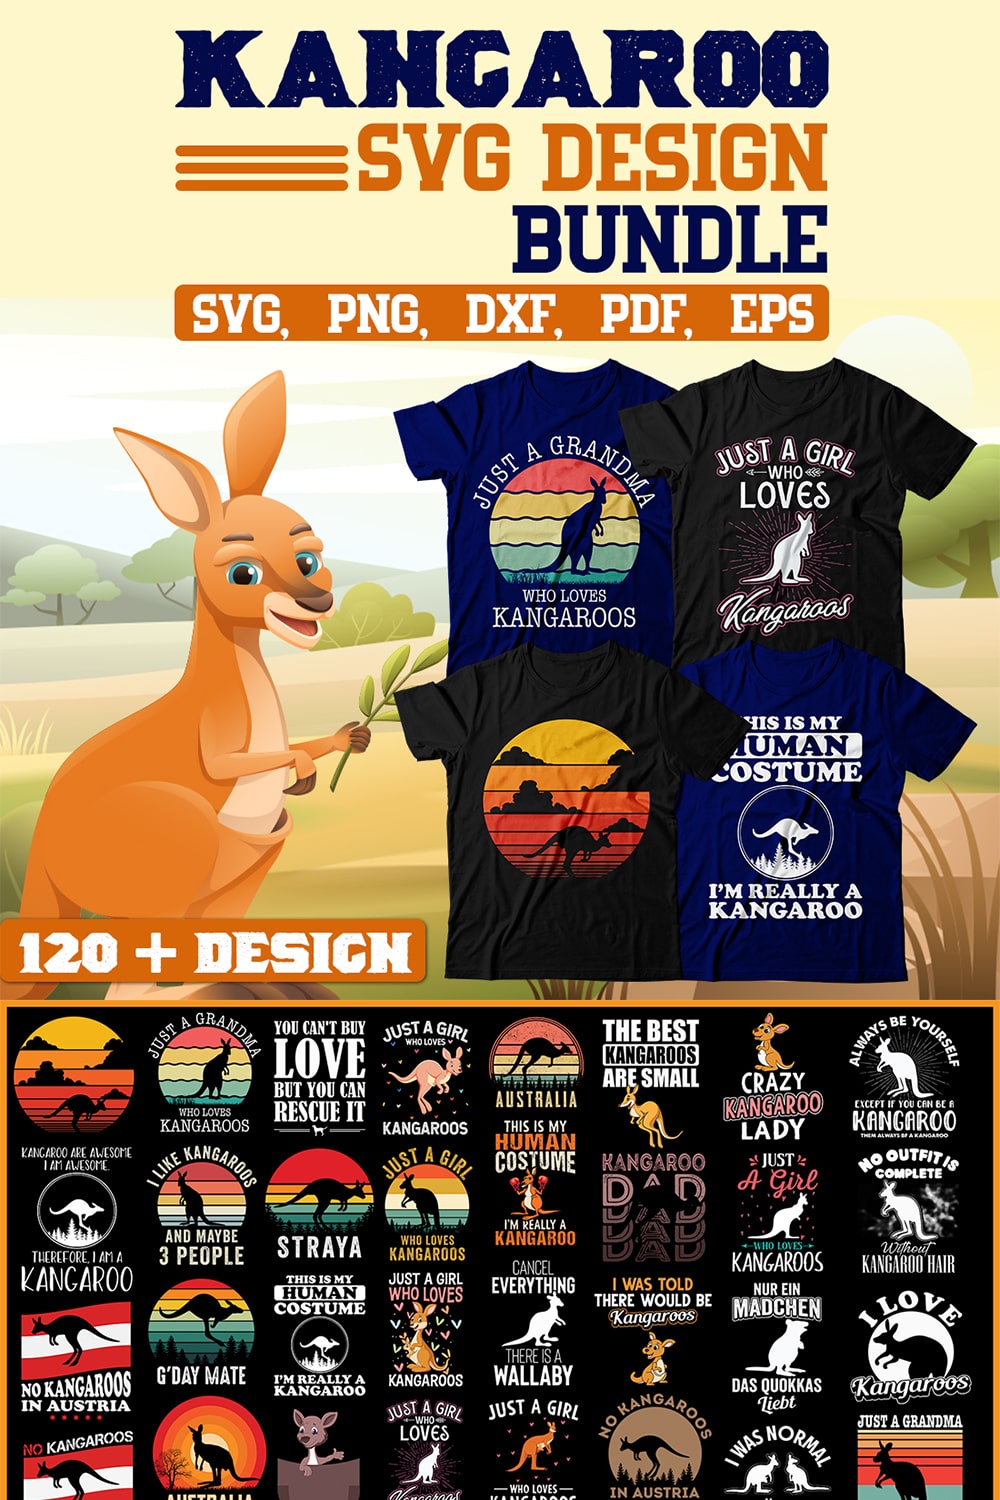 Kangaroo SVG Design Bundle pinterest preview image.